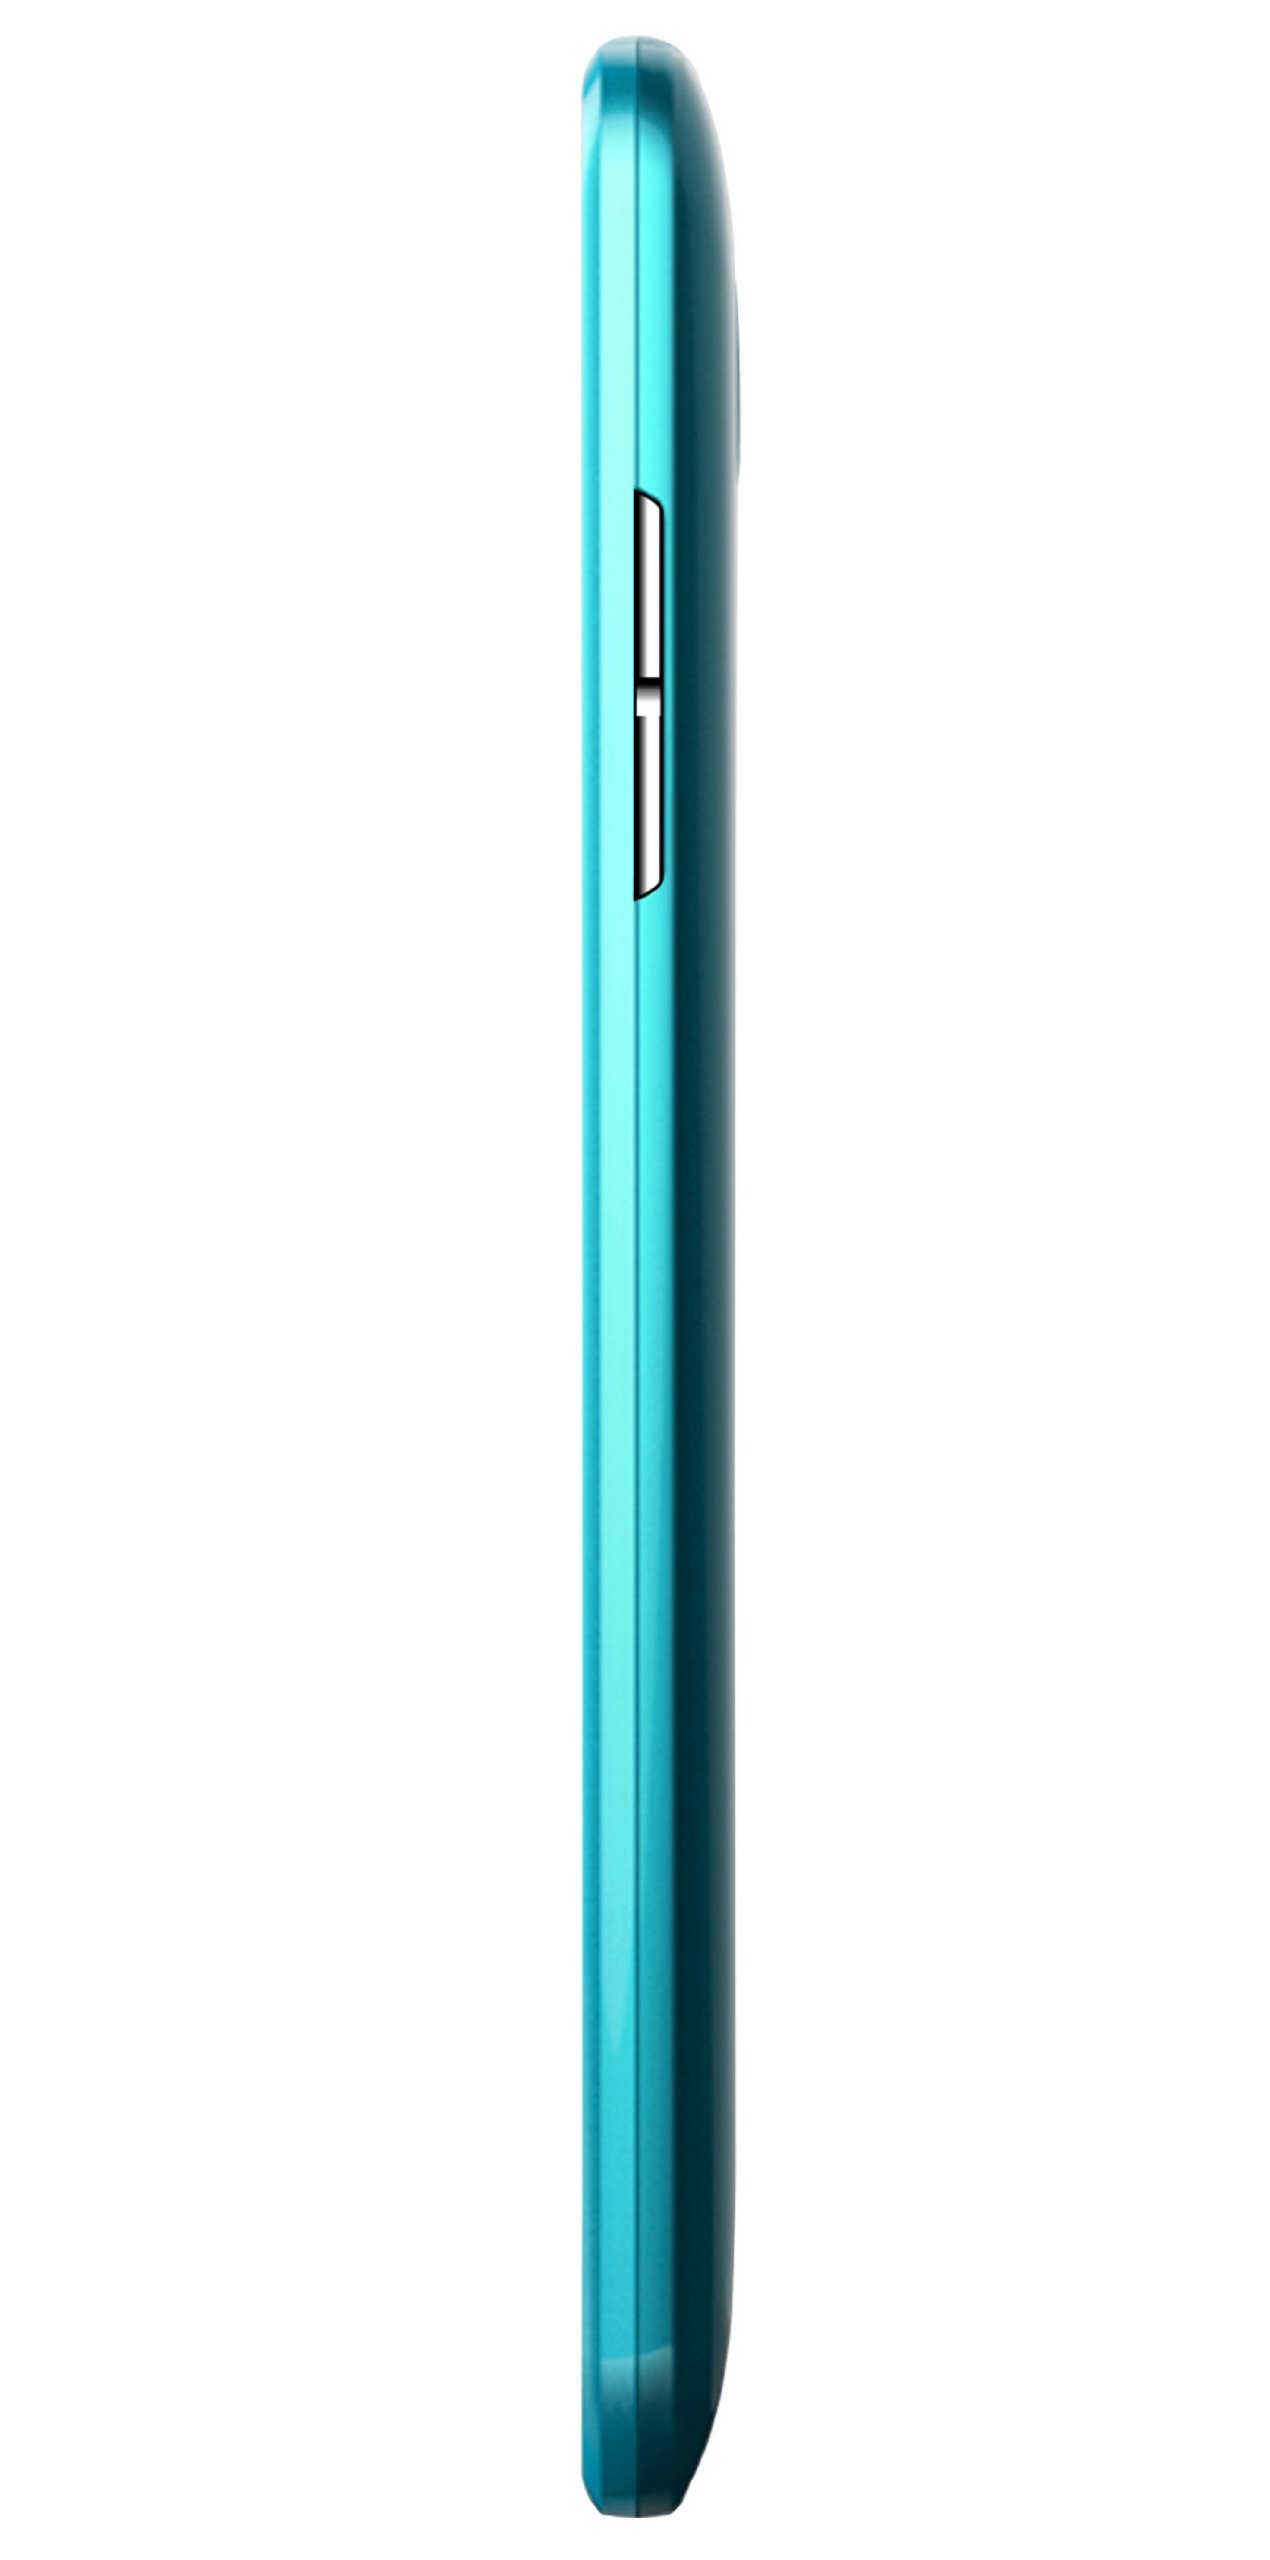 BLU Dash 5.0 D410a Unlocked Dual SIM GSM Phone (Blue)